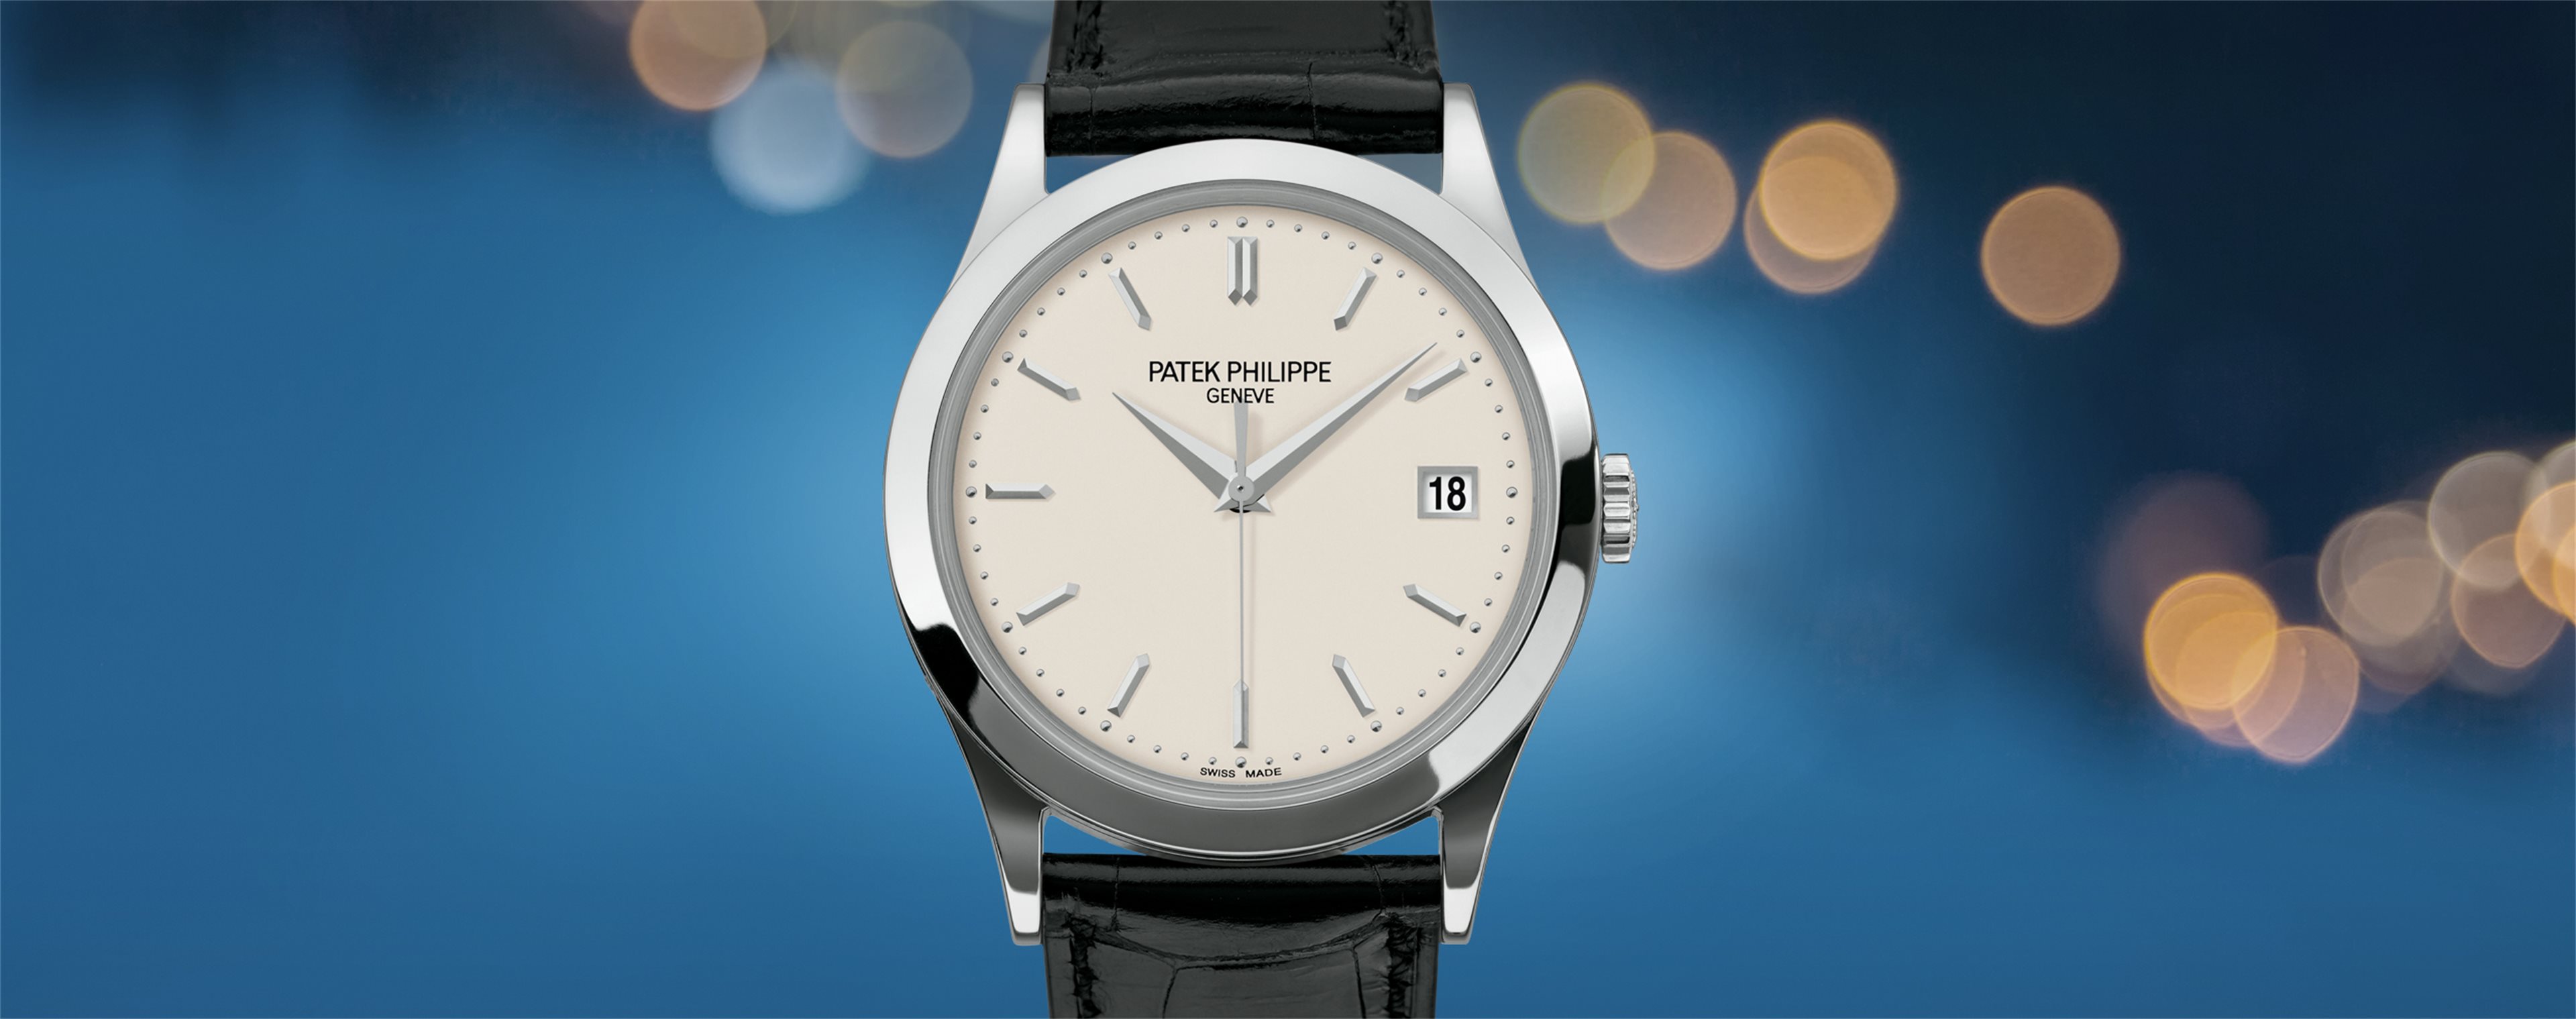 Patek Philippe Perpetual Calendar Retrograde 18k White Gold Mens Watch 5059